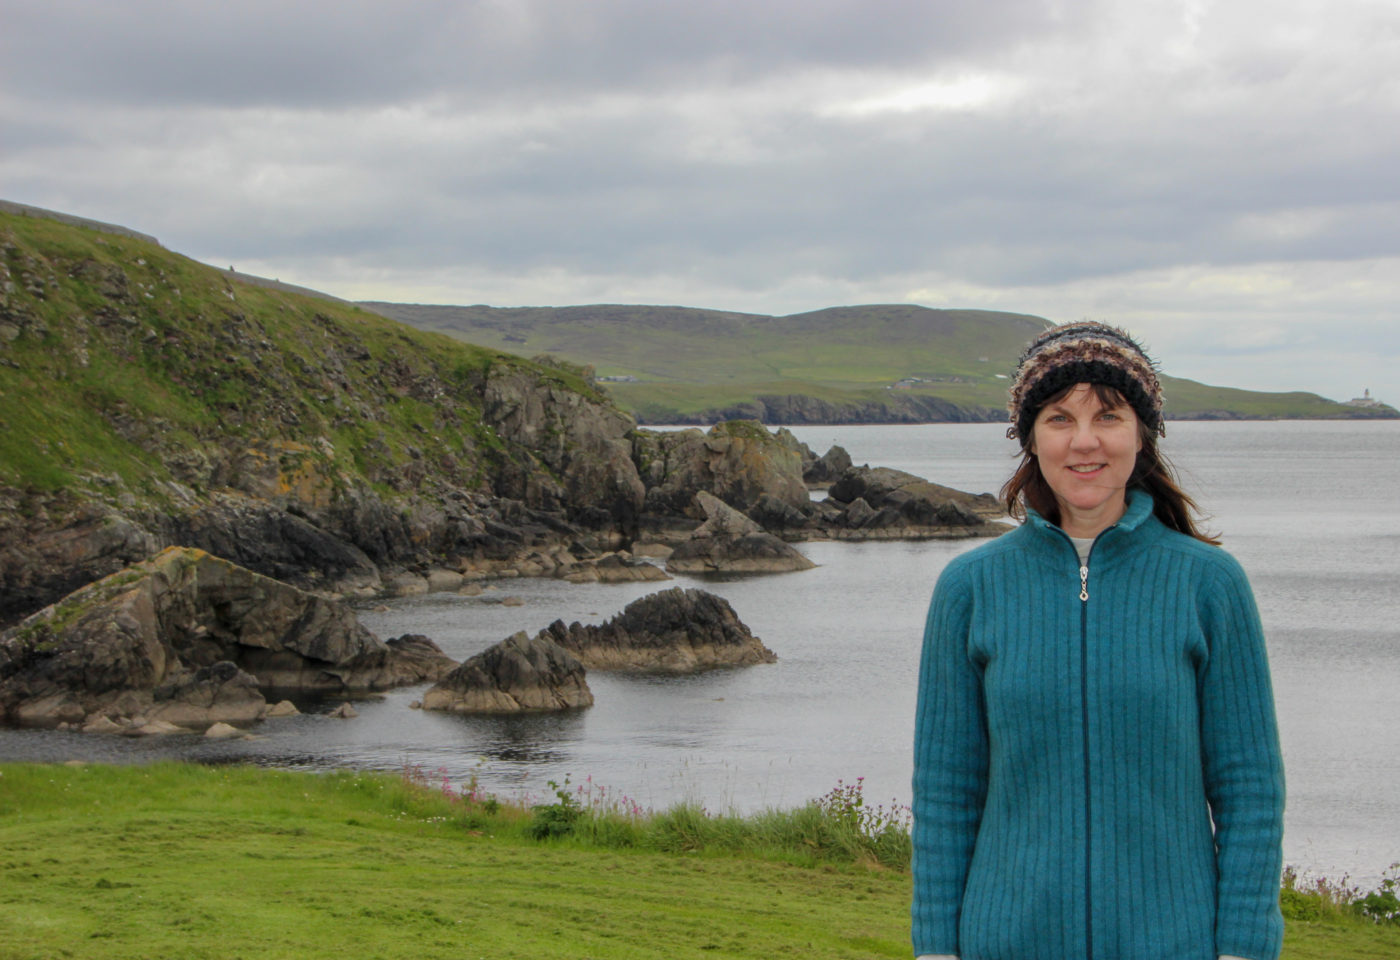 The Charming Lerwick in Shetland Islands – A Scenic Walking Tour